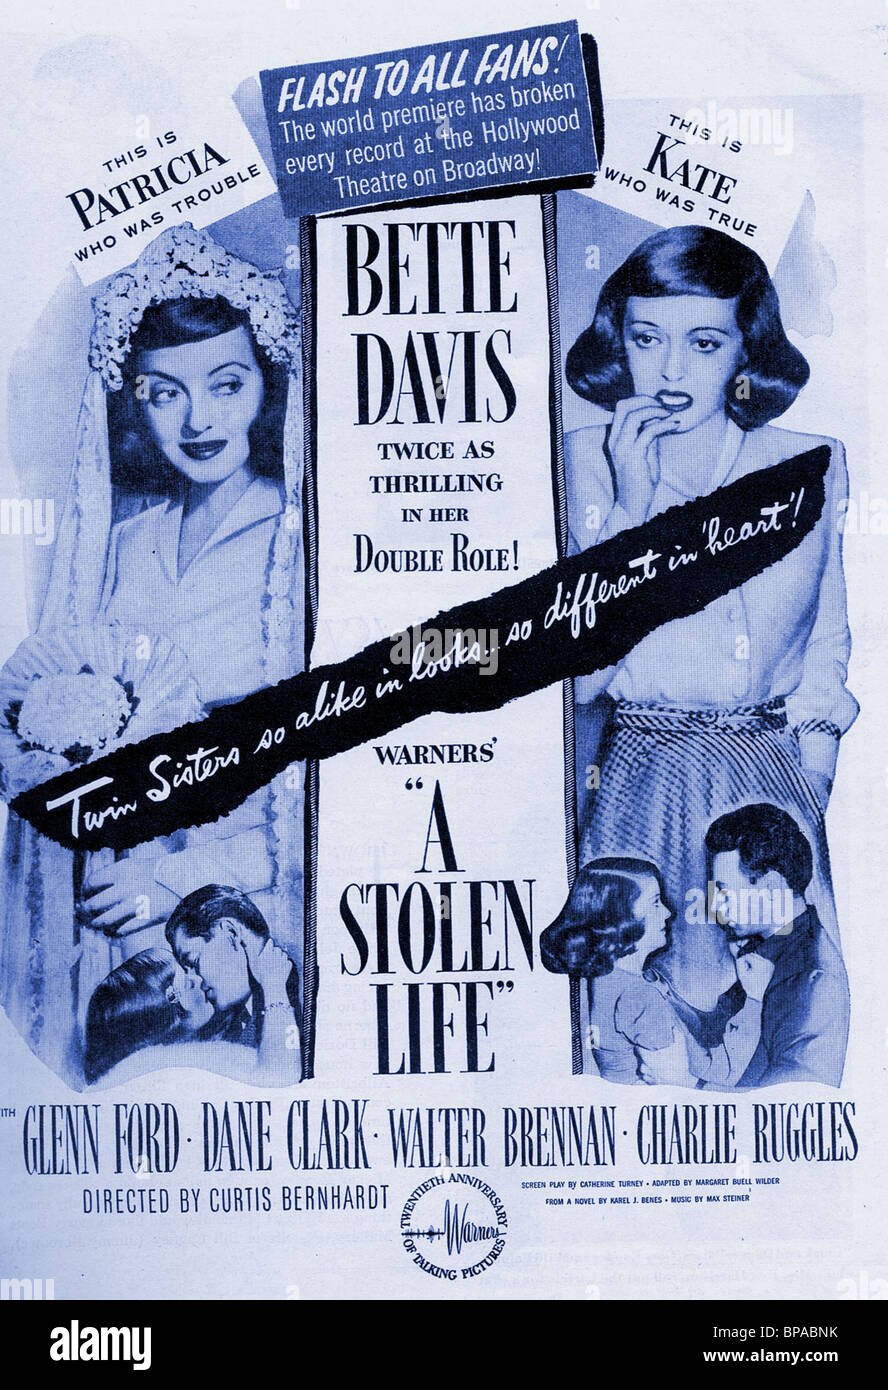 BETTE DAVIS FILM POSTER A STOLEN LIFE (1946 Stock Photo - Alamy